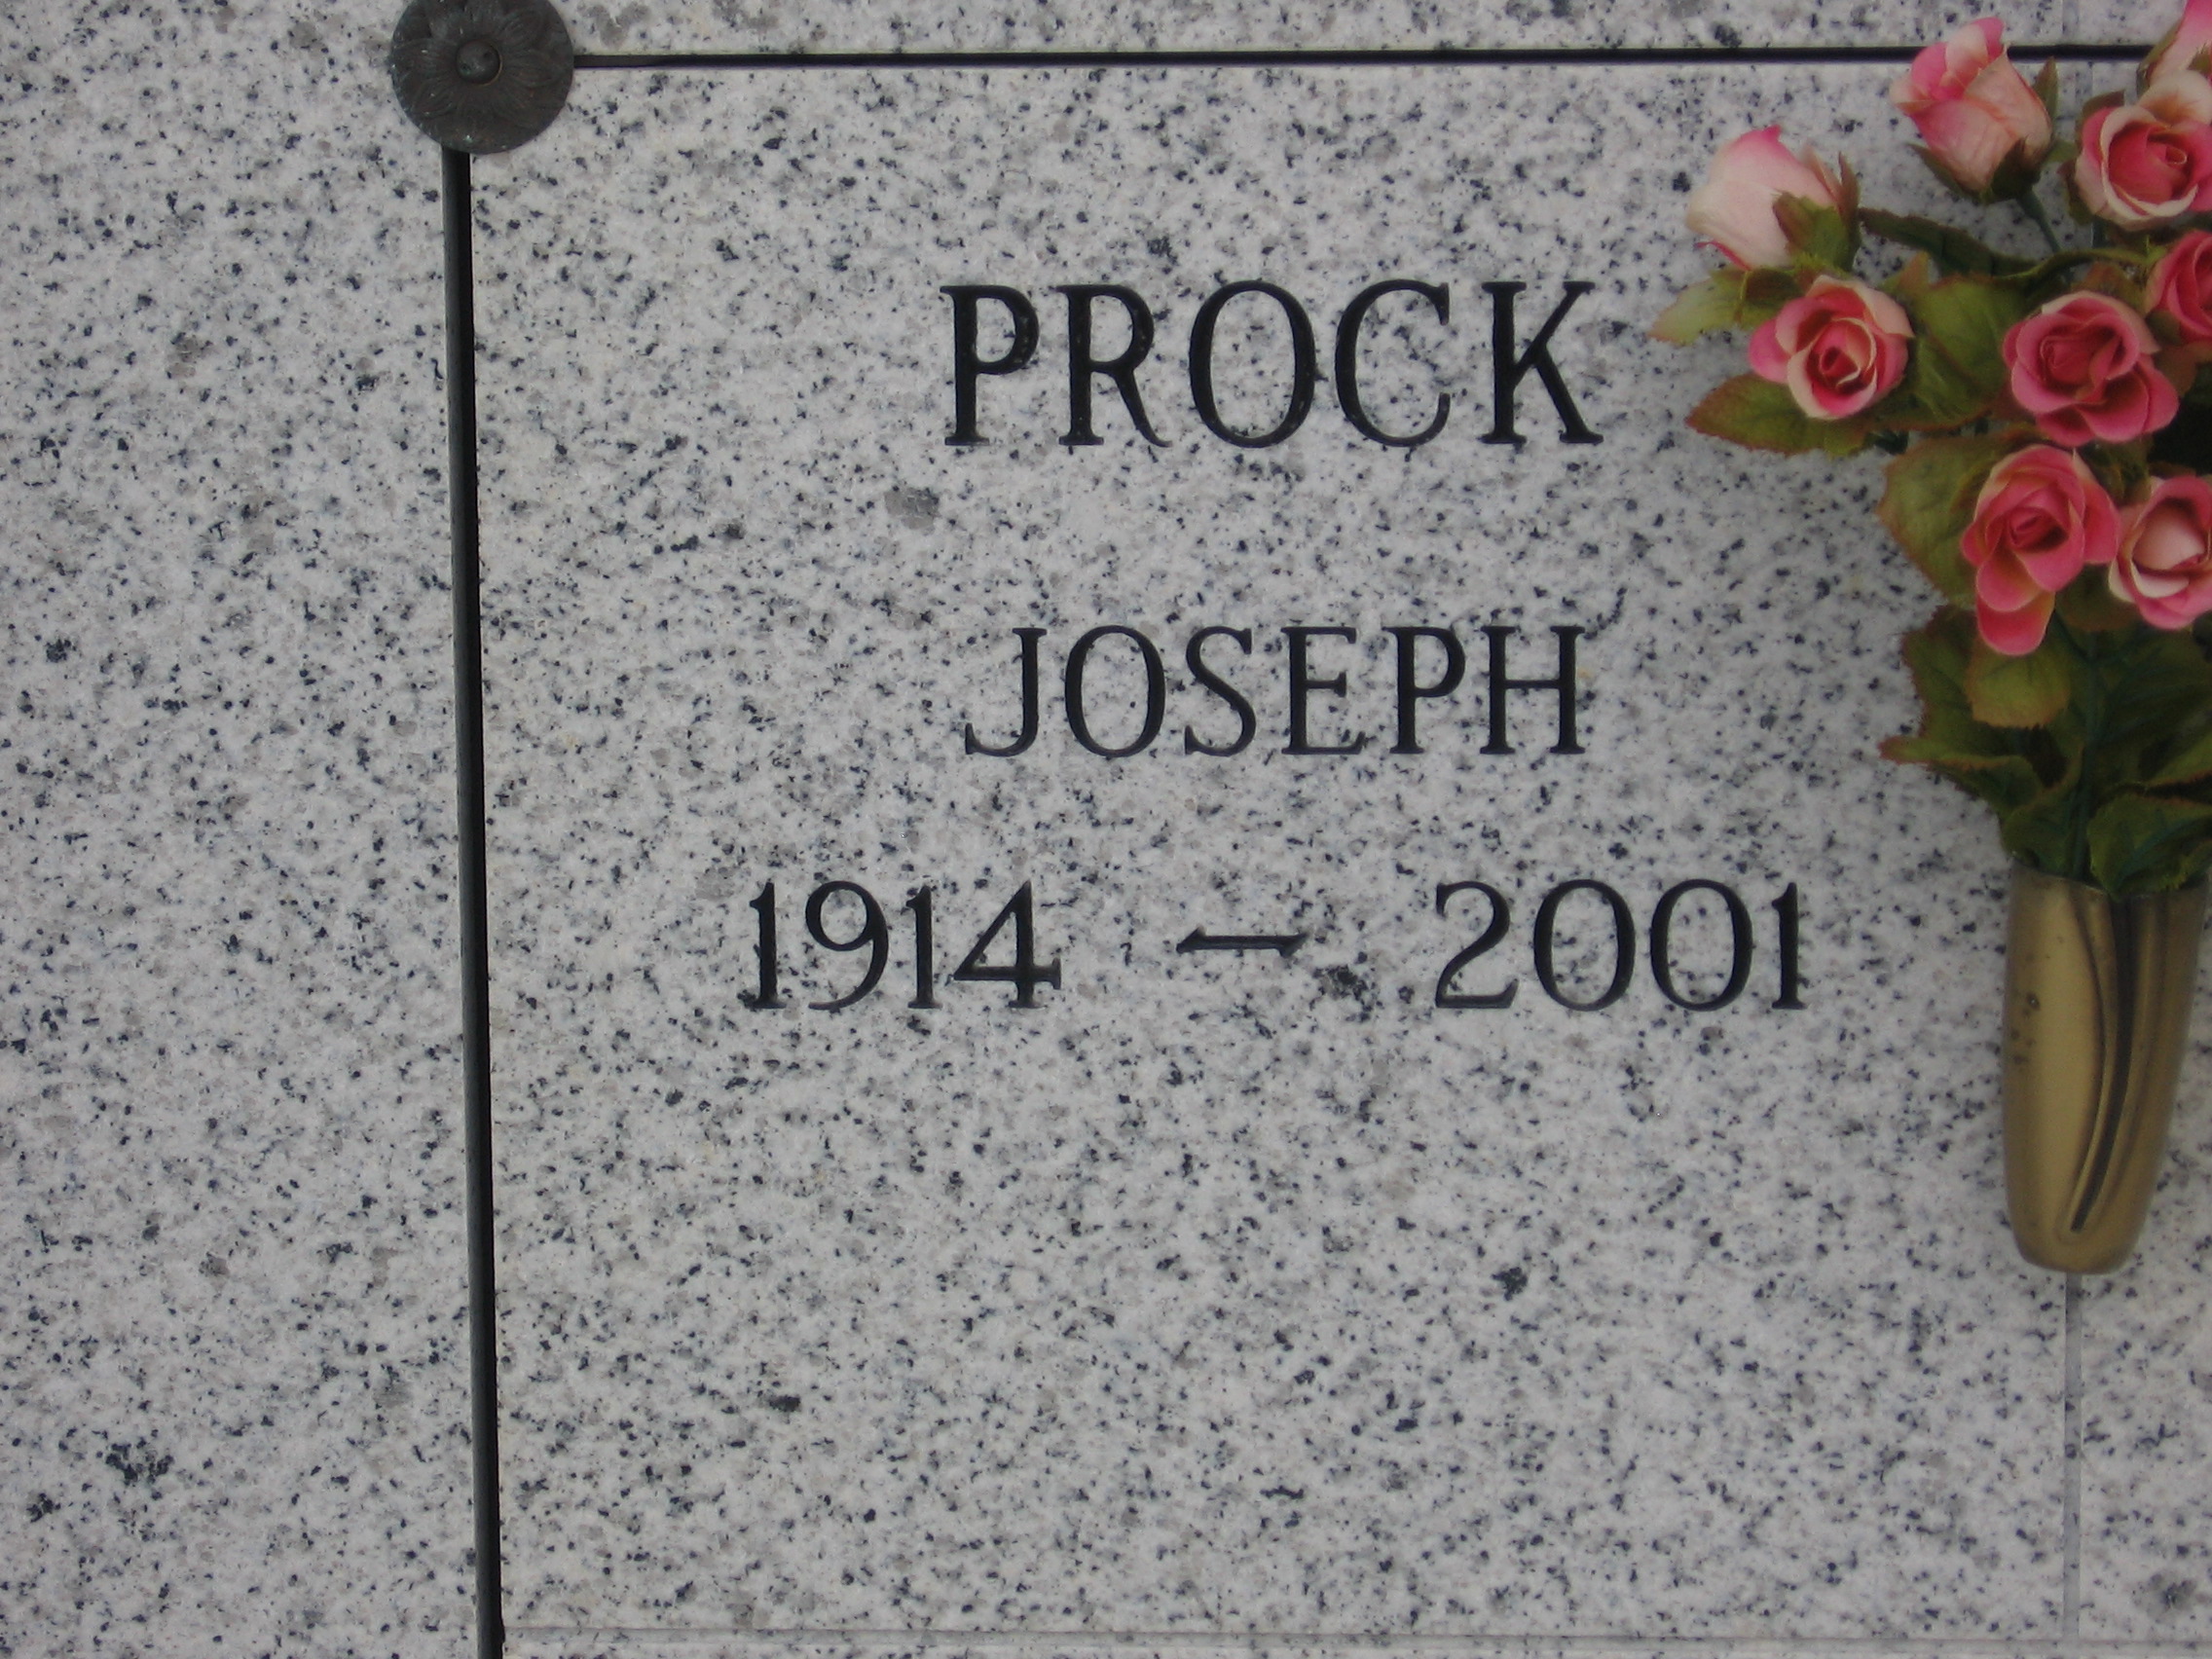 Joseph Prock